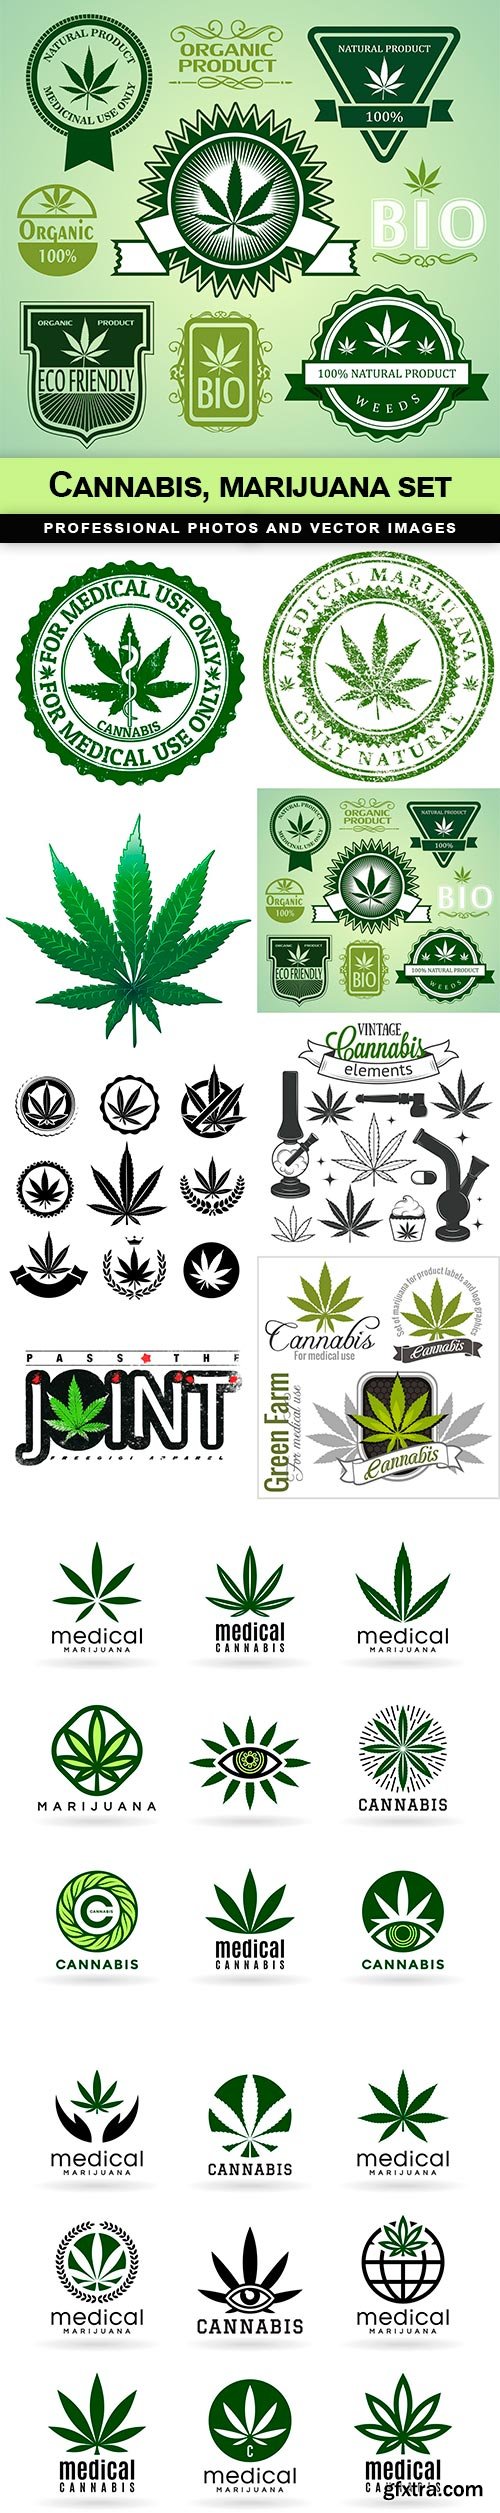 Cannabis, marijuana set - 10 EPS